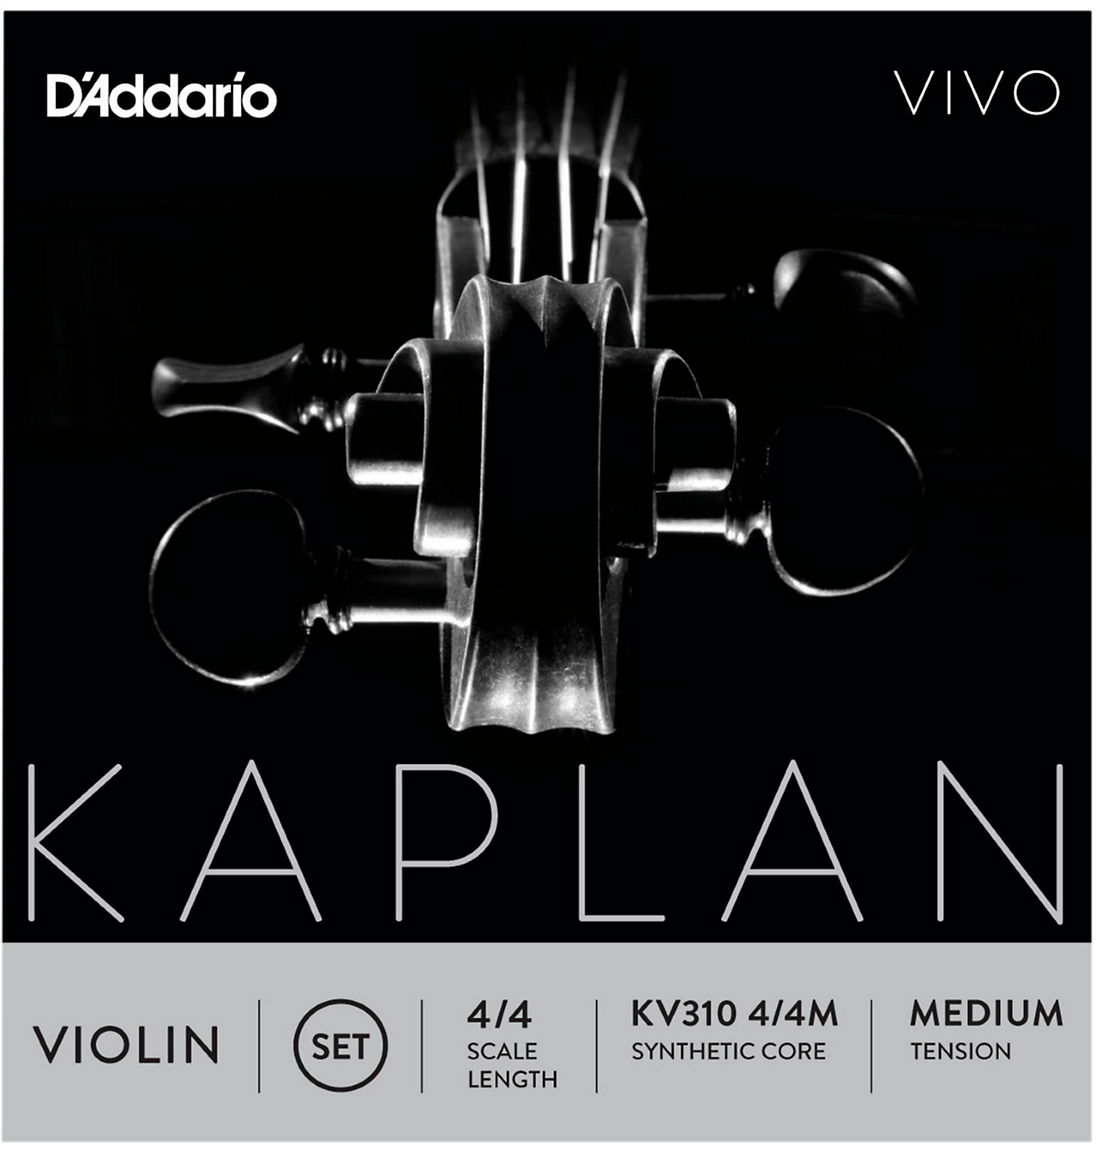 D'addario Kaplan Vivo Violin Strings